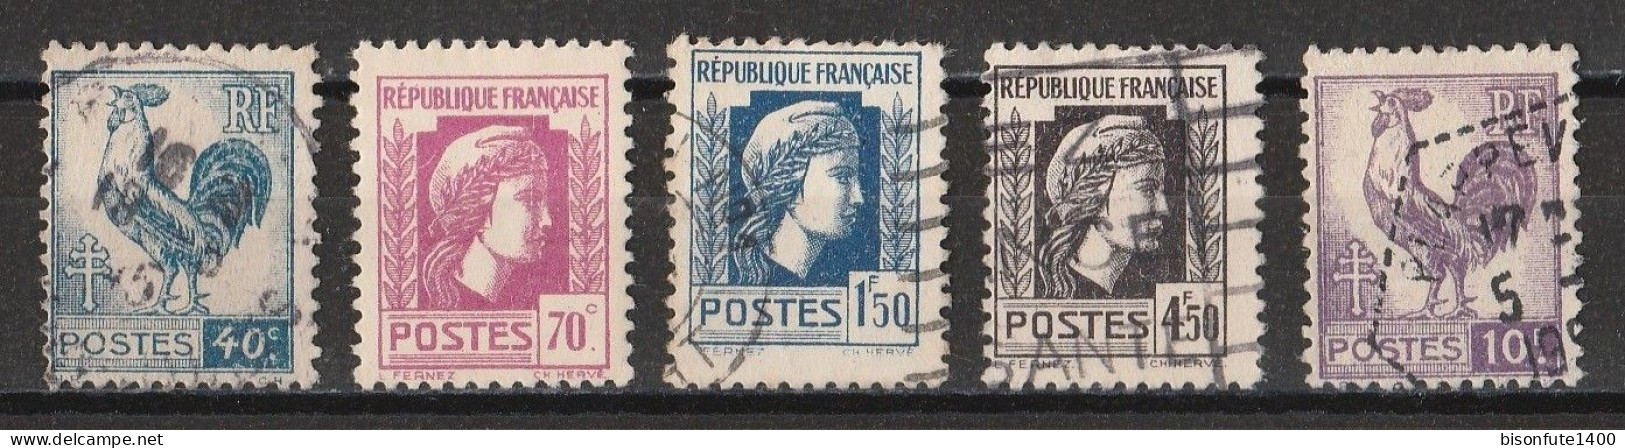 France 1944 : Timbres Yvert & Tellier N° 632 - 635 - 639 - 644 Et 646 Avec Oblitérations Rondes. - Used Stamps